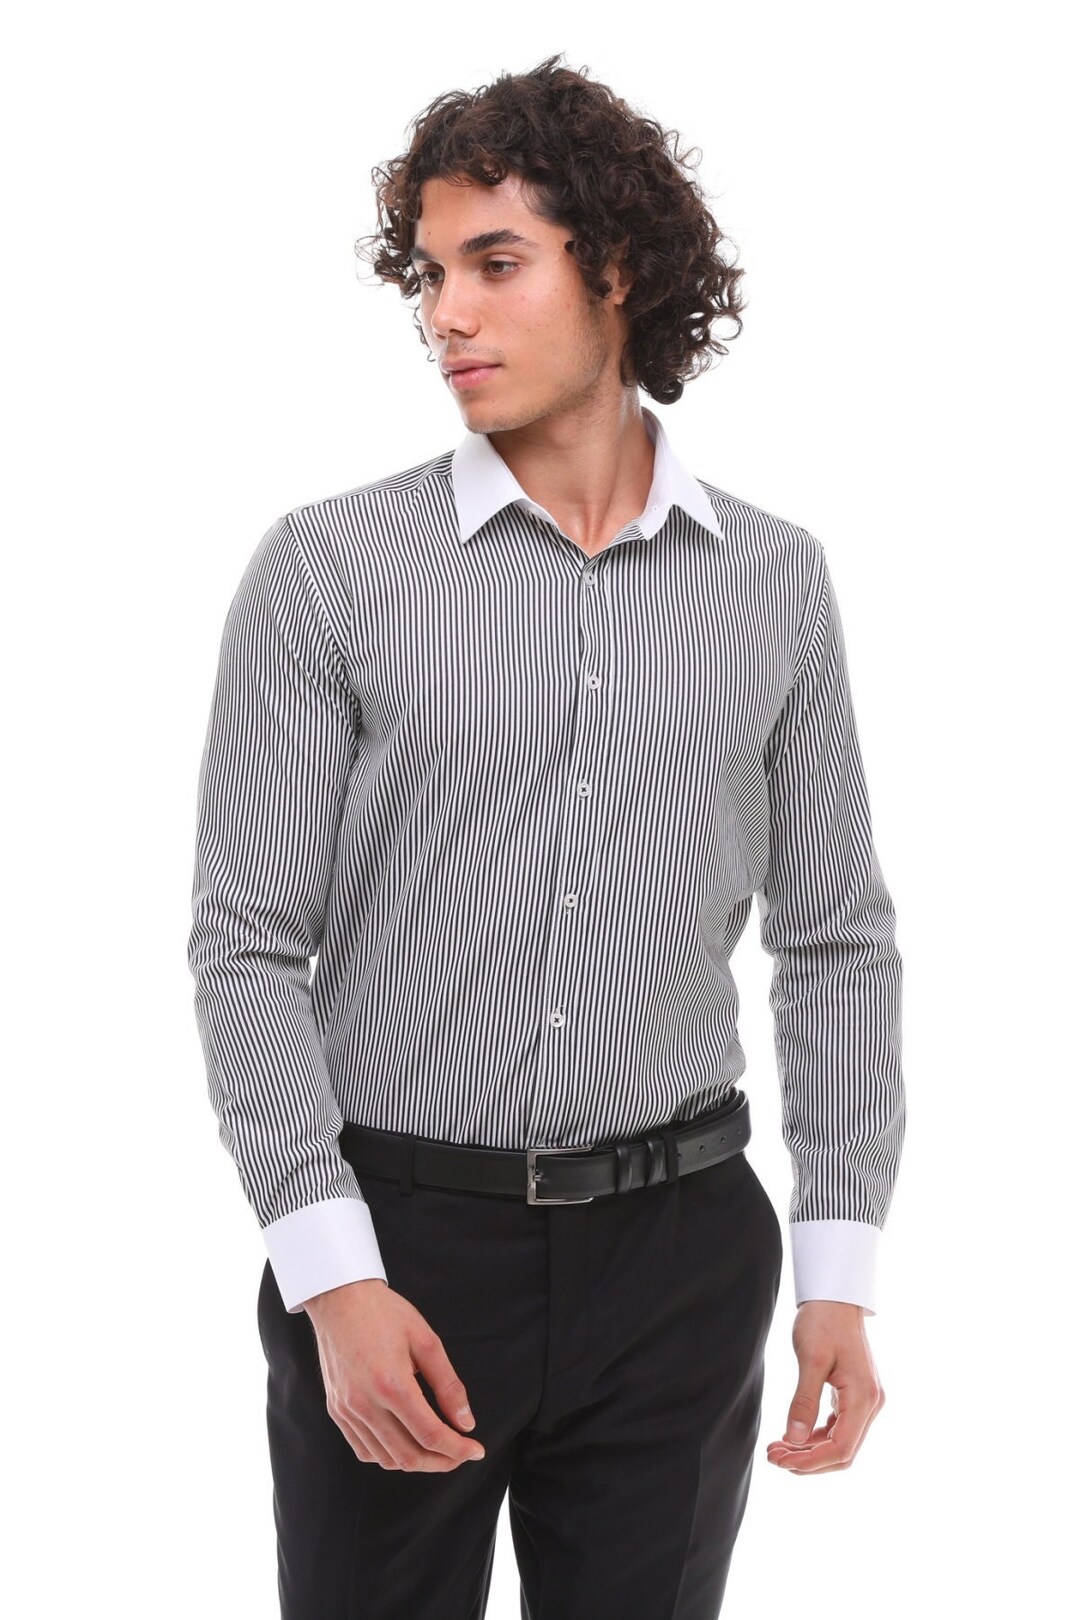 ICONIC BLACK STRIPE Black Stripe With White Collar Shirt for Men - Etsy